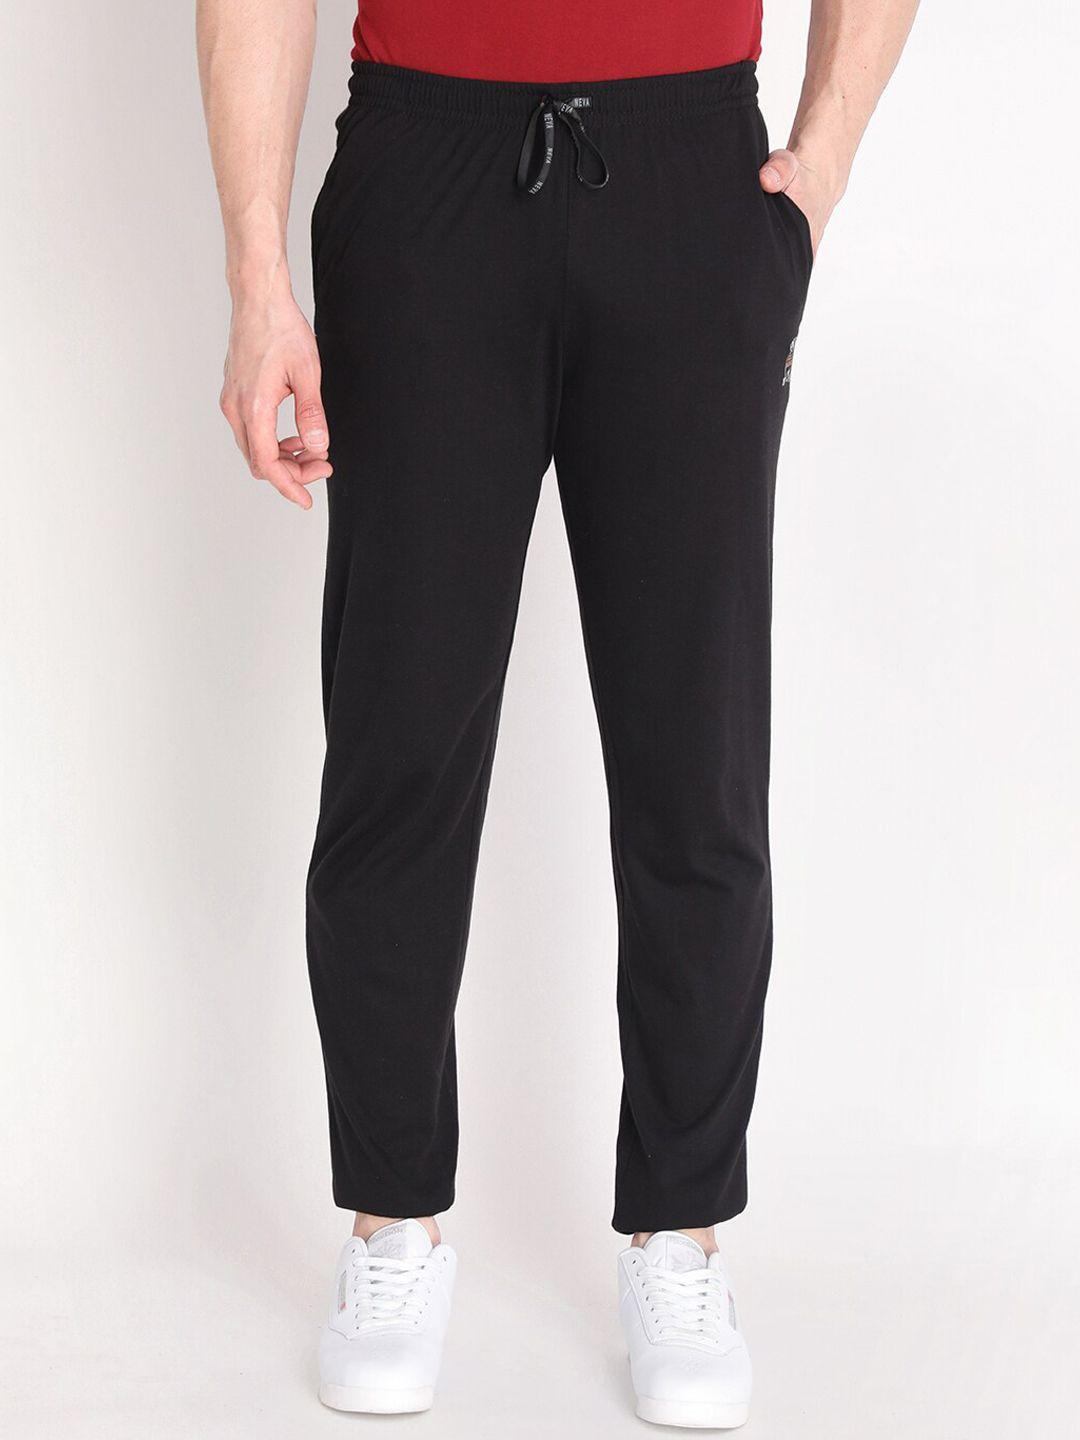 neva-men-black-solid-cotton-track-pants